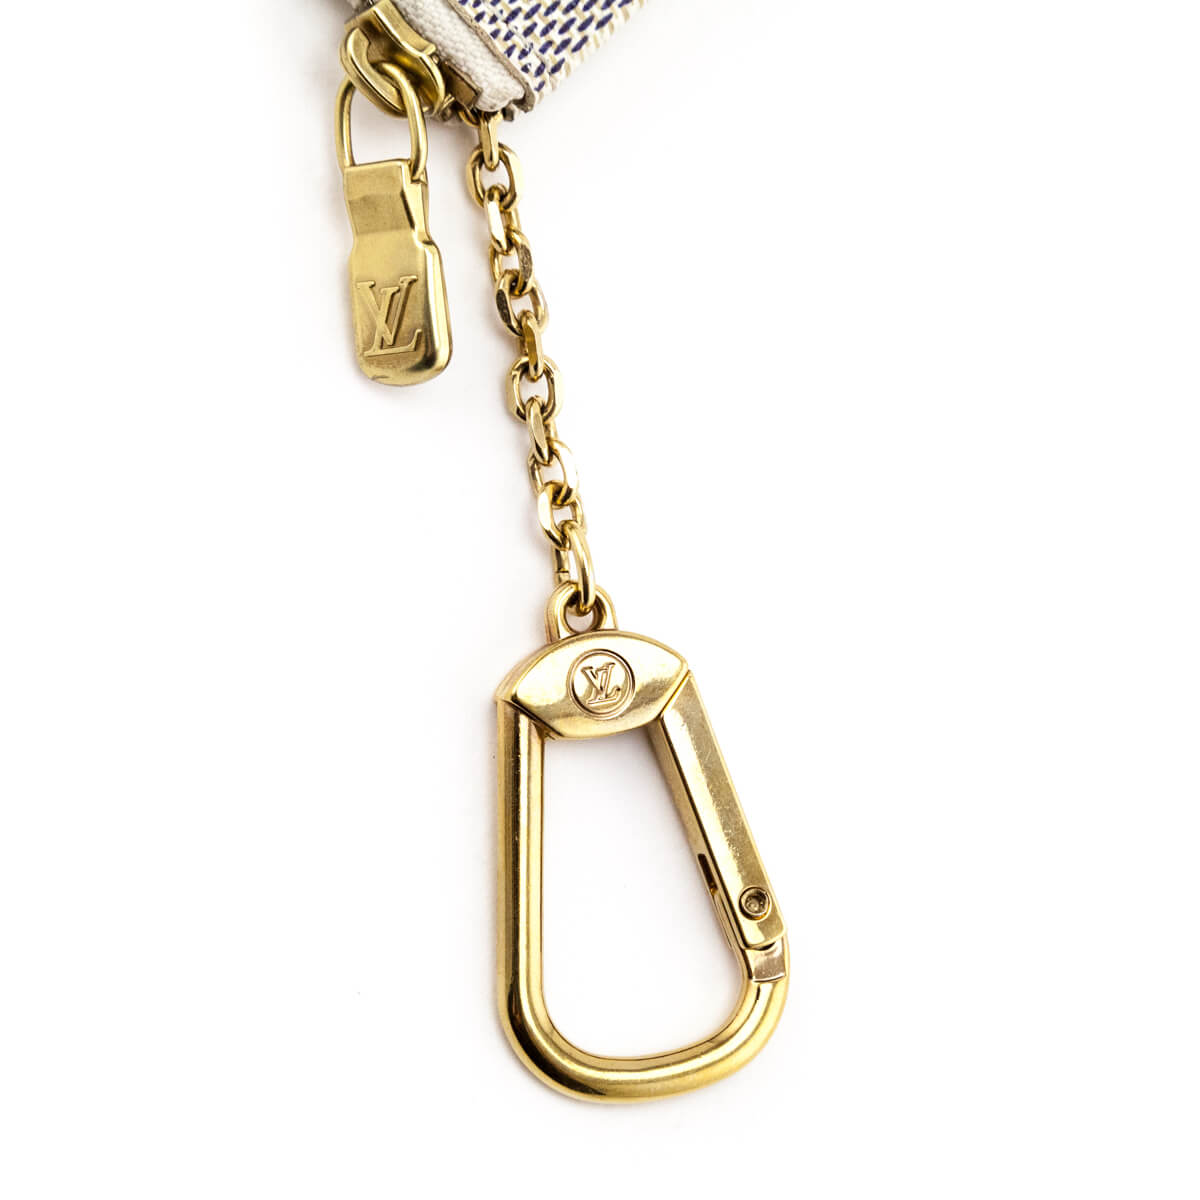 Key Pouch Trunks & Bags Damier Azur – Keeks Designer Handbags